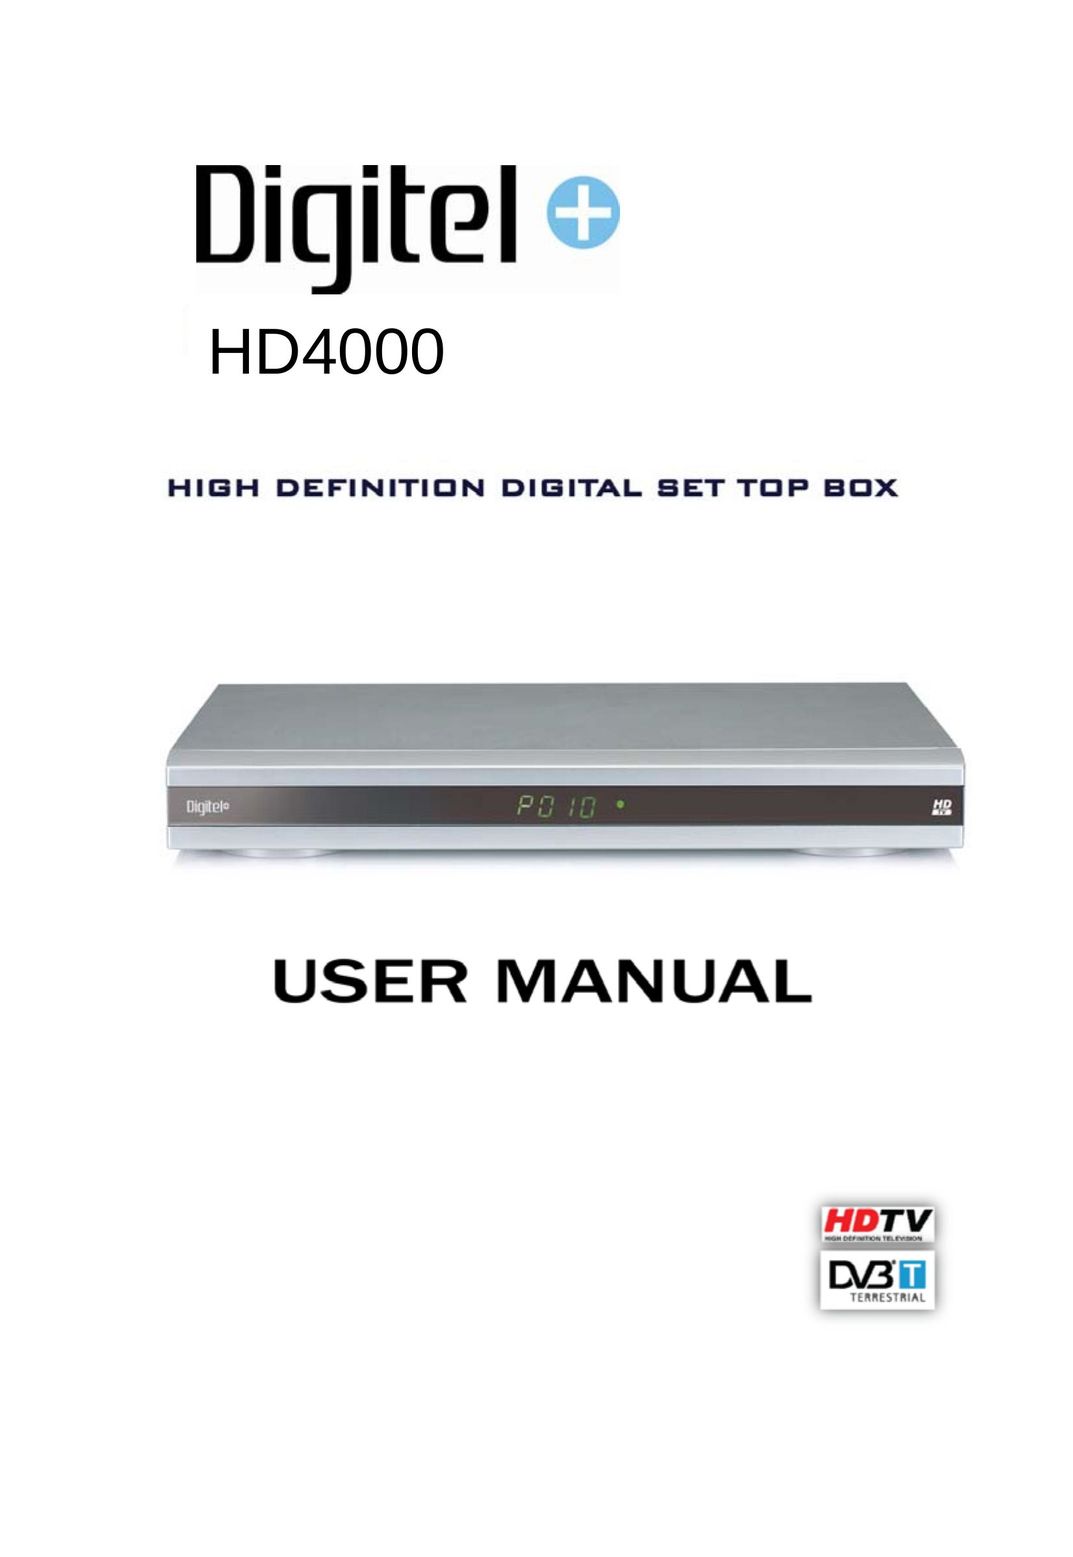 888 Digital HD4000 DVR User Manual